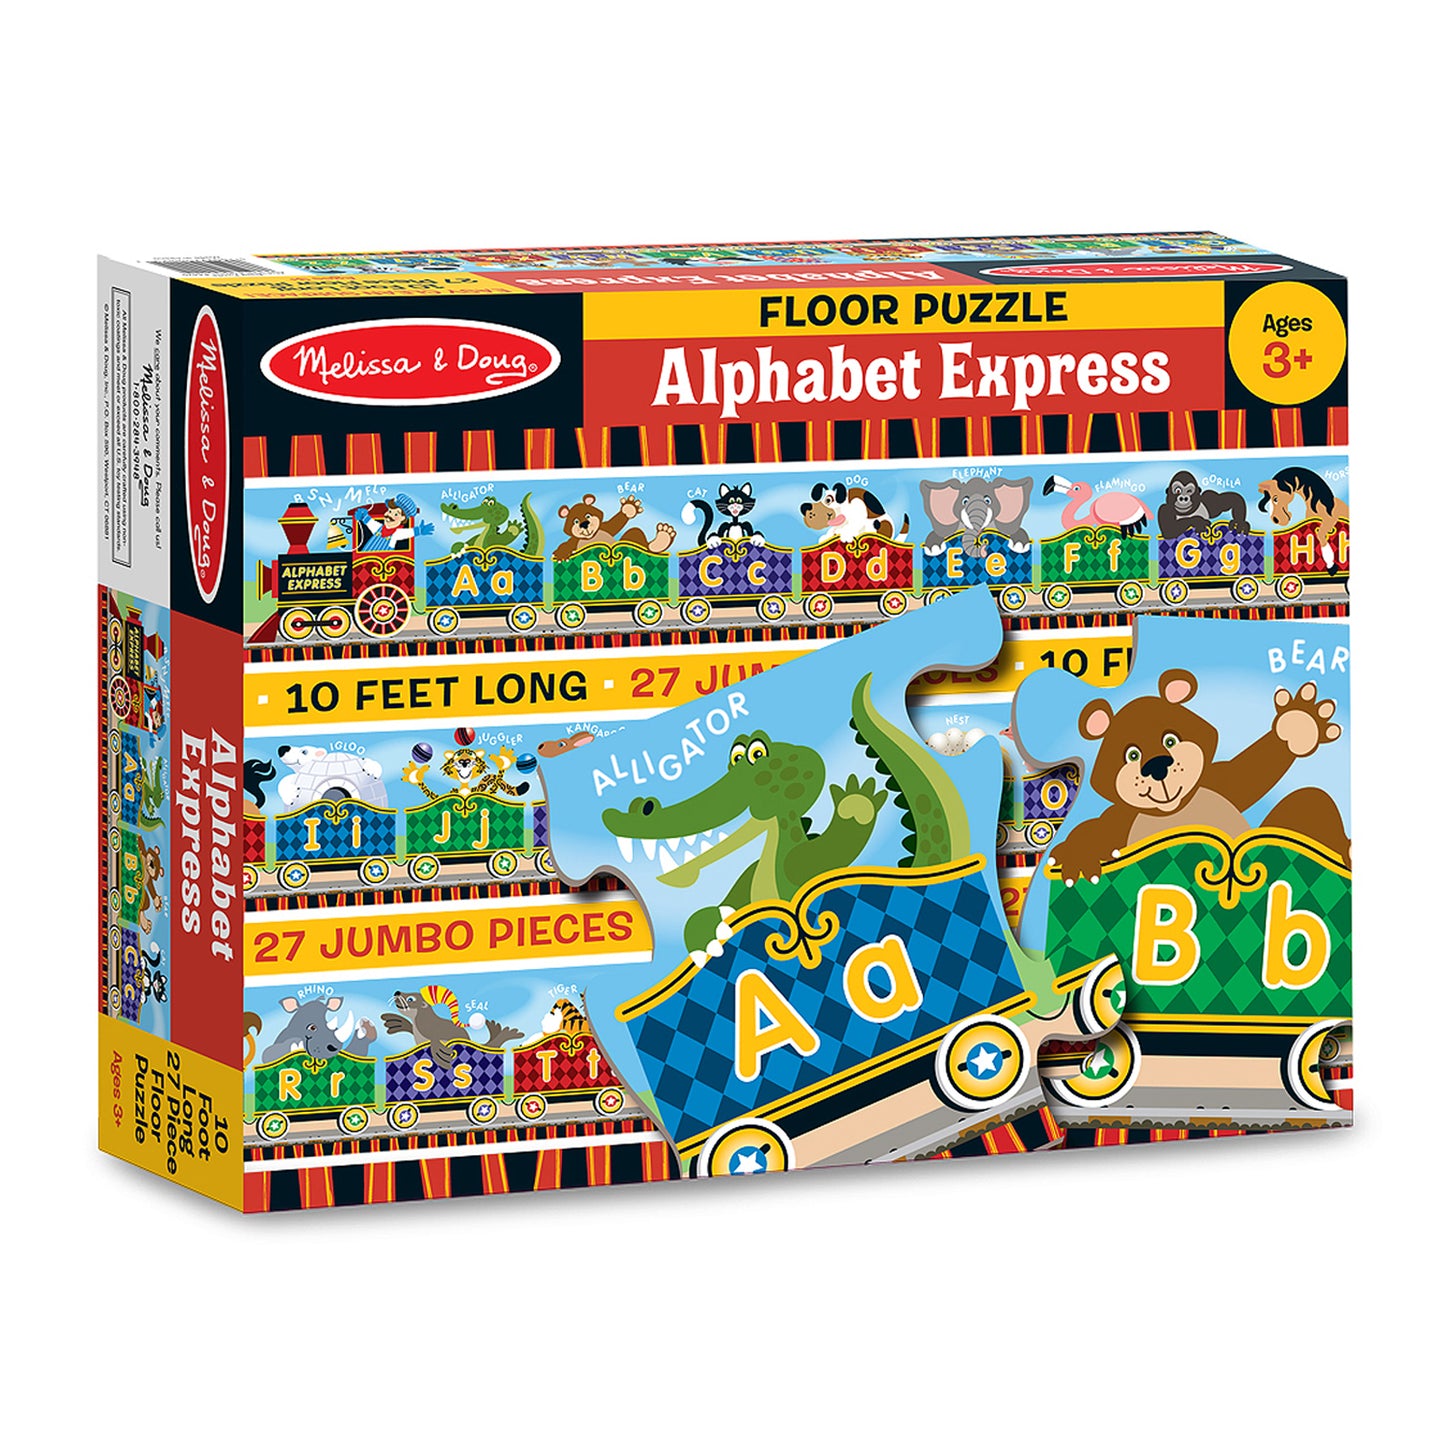 Alphabet Express Floor Puzzle, 10' x 6-1/2", 27 Pieces, Pack of 2